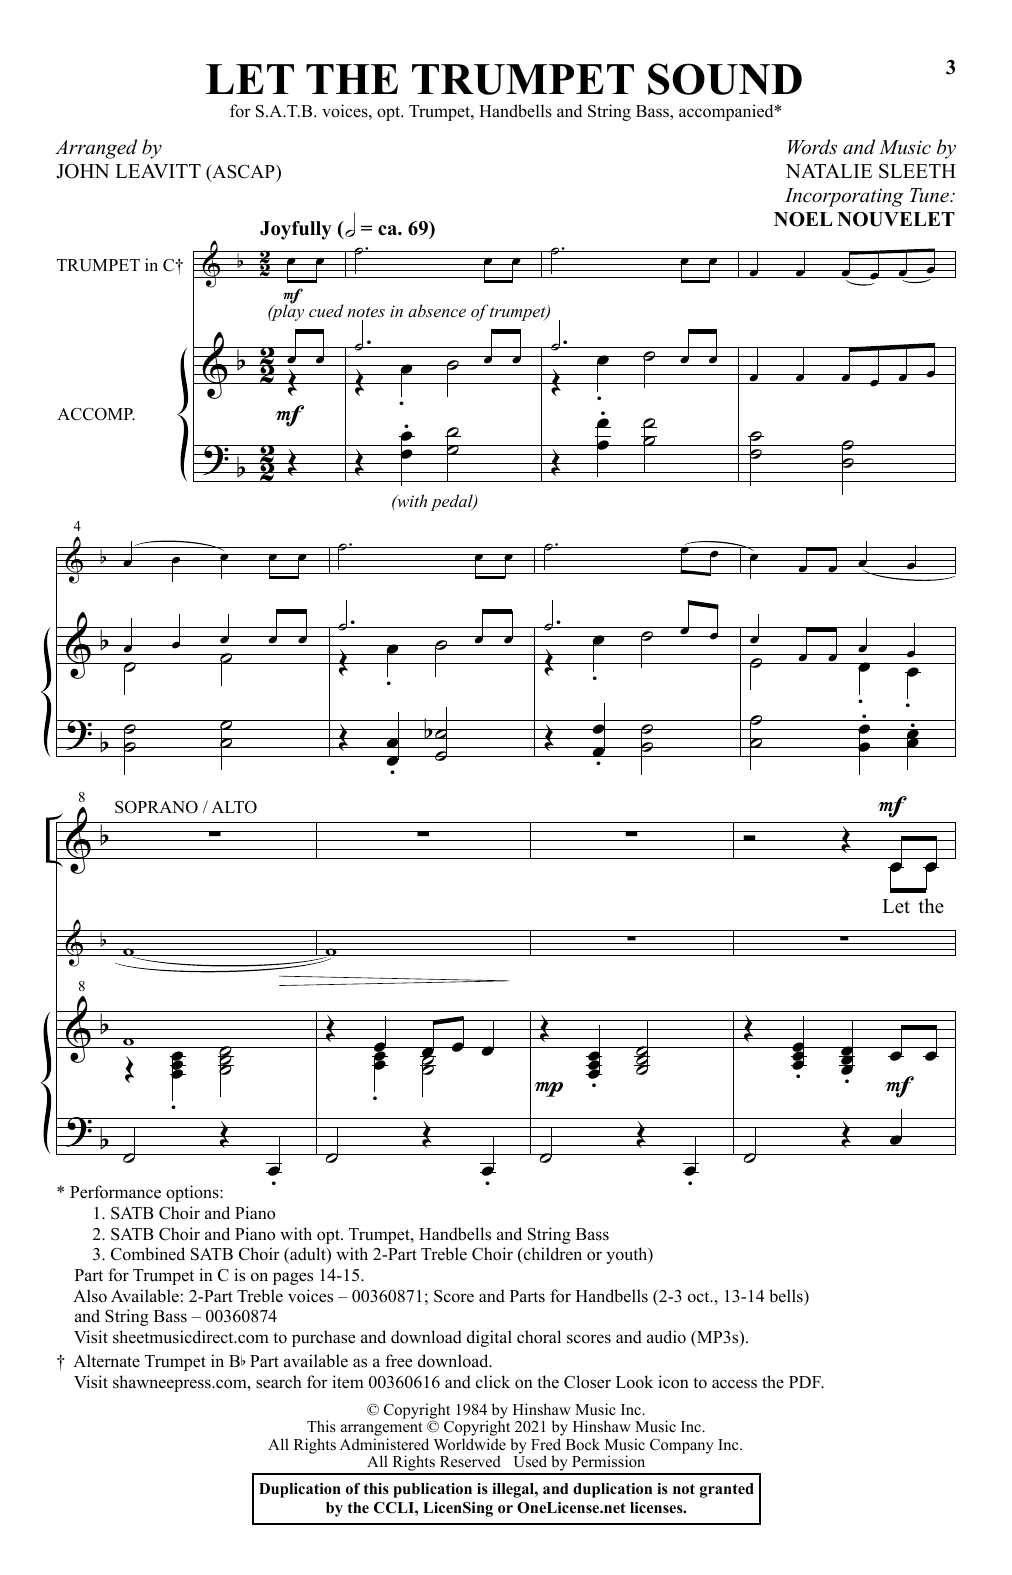 Natalie Sleeth Let The Trumpet Sound (arr. John Leavitt) Sheet Music Notes & Chords for 2-Part Choir - Download or Print PDF